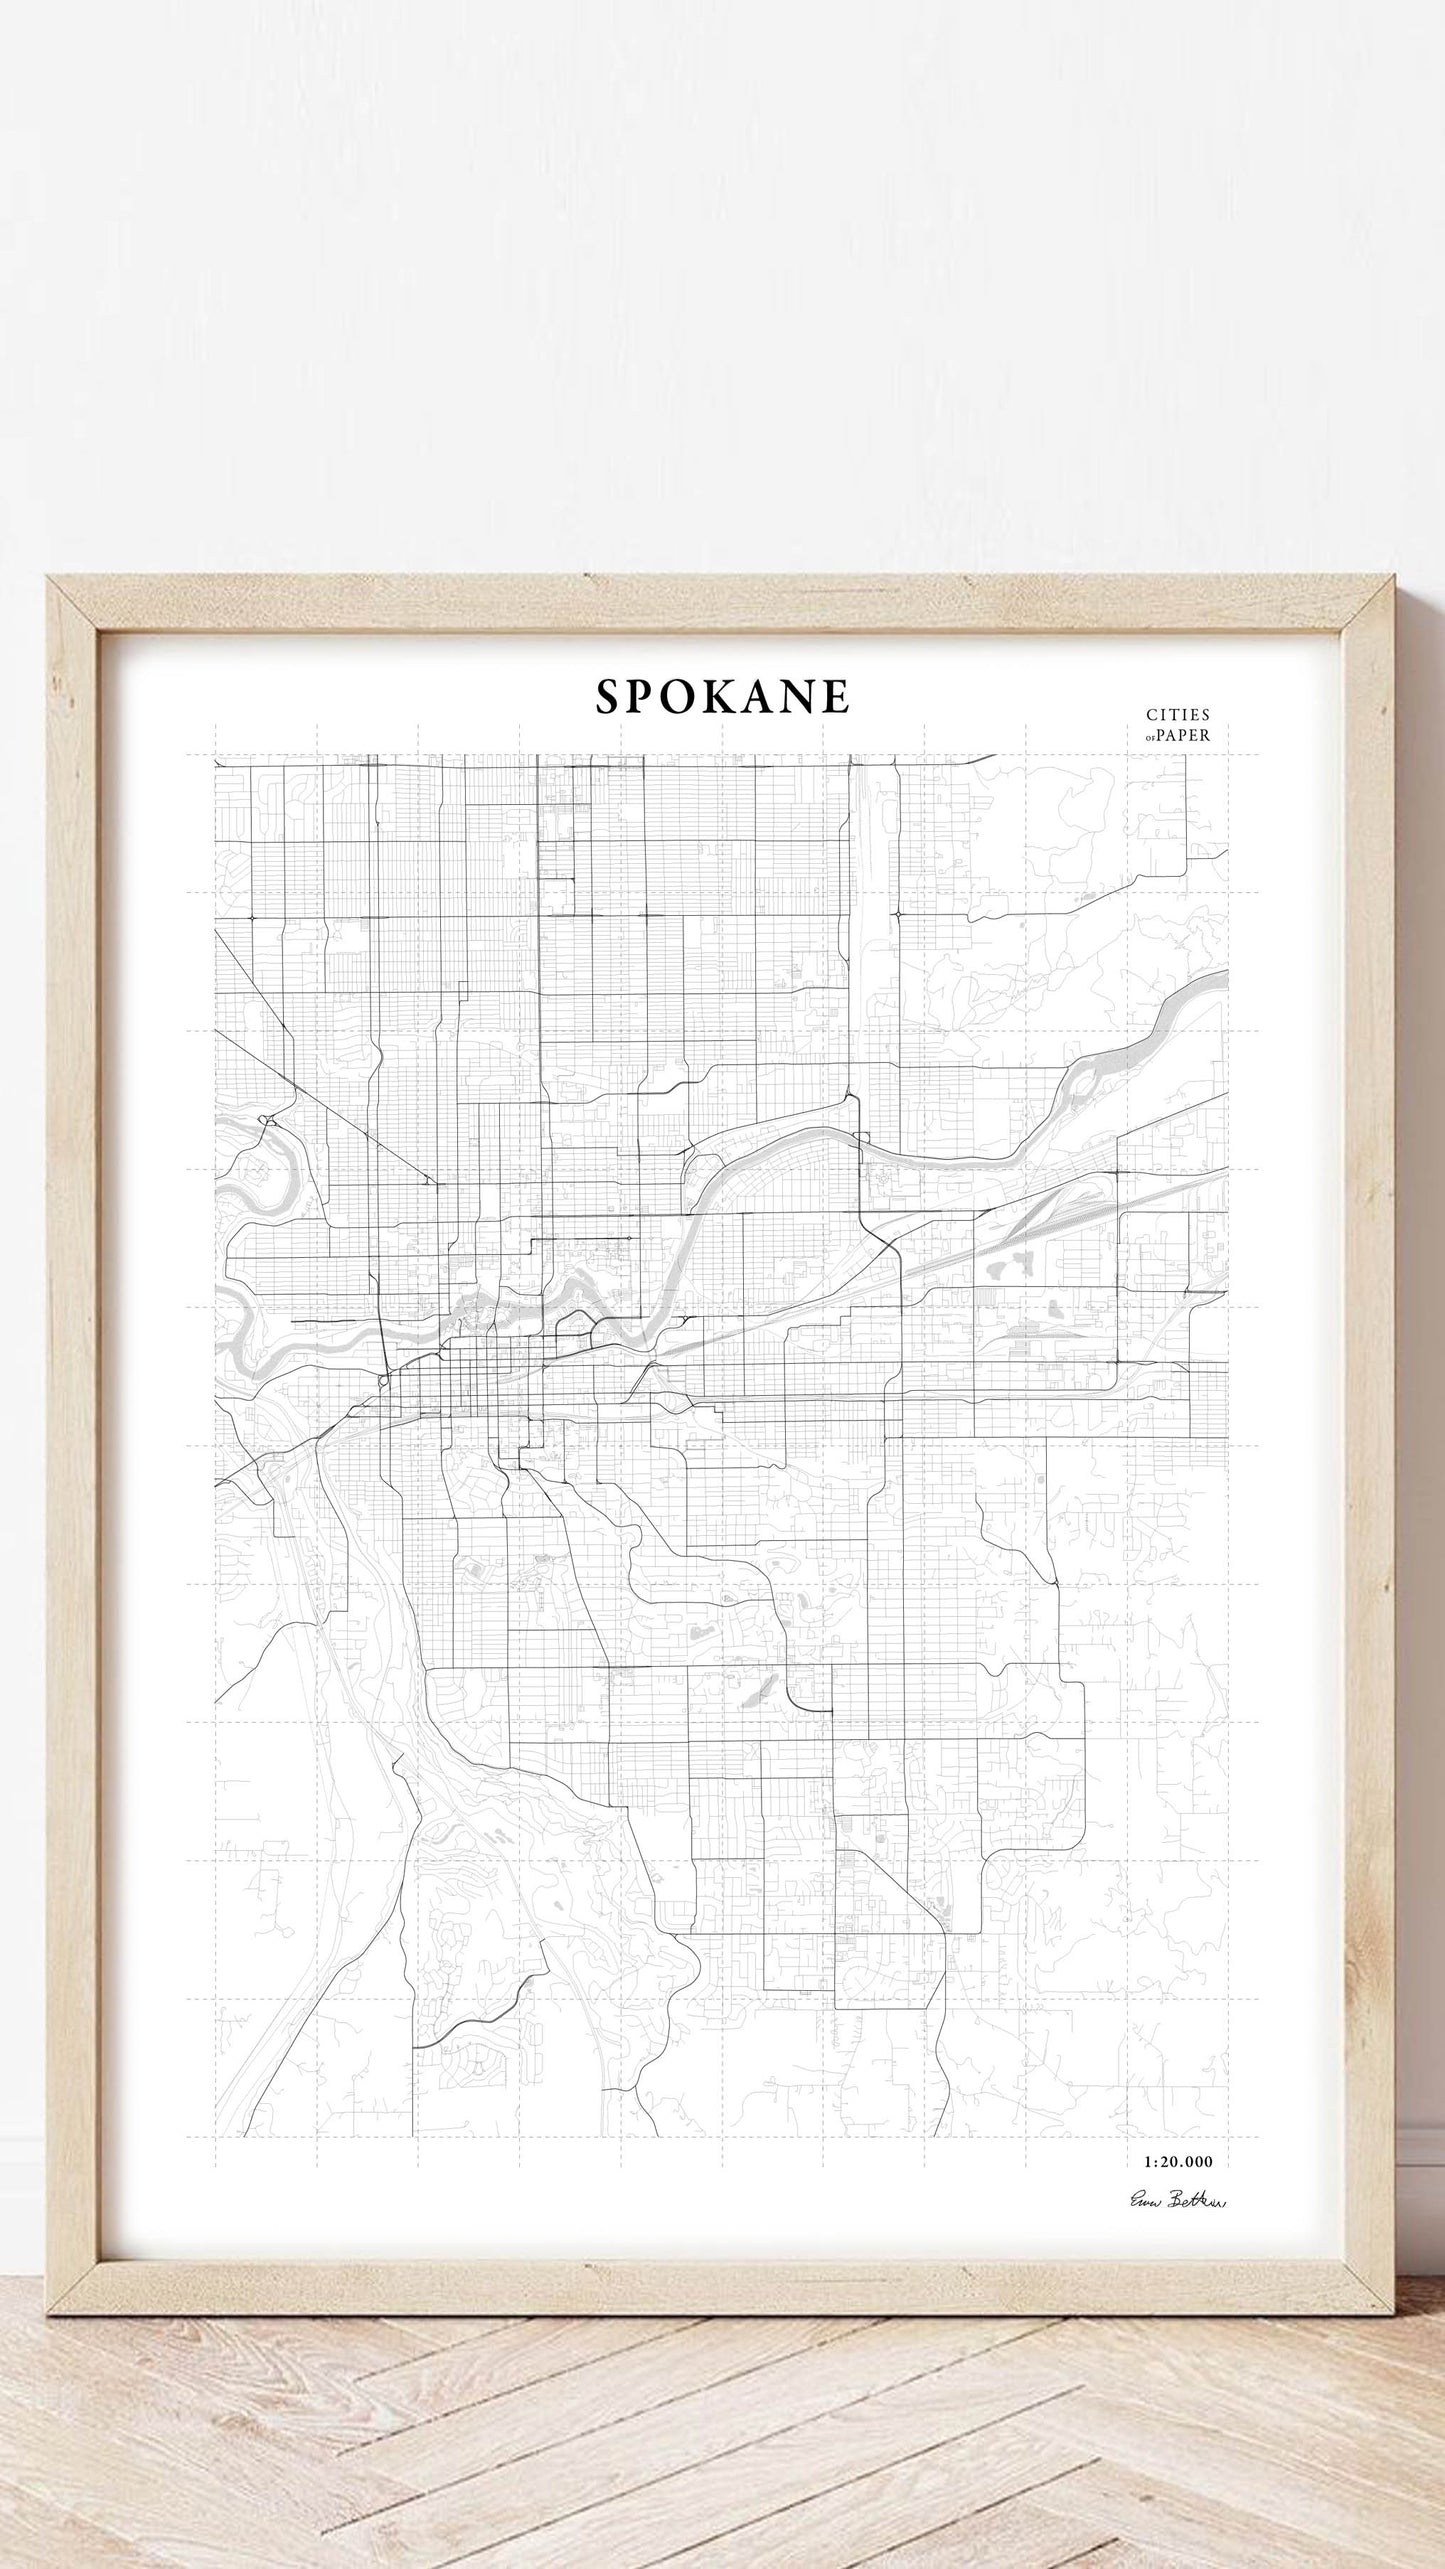 Artwork of Spokane